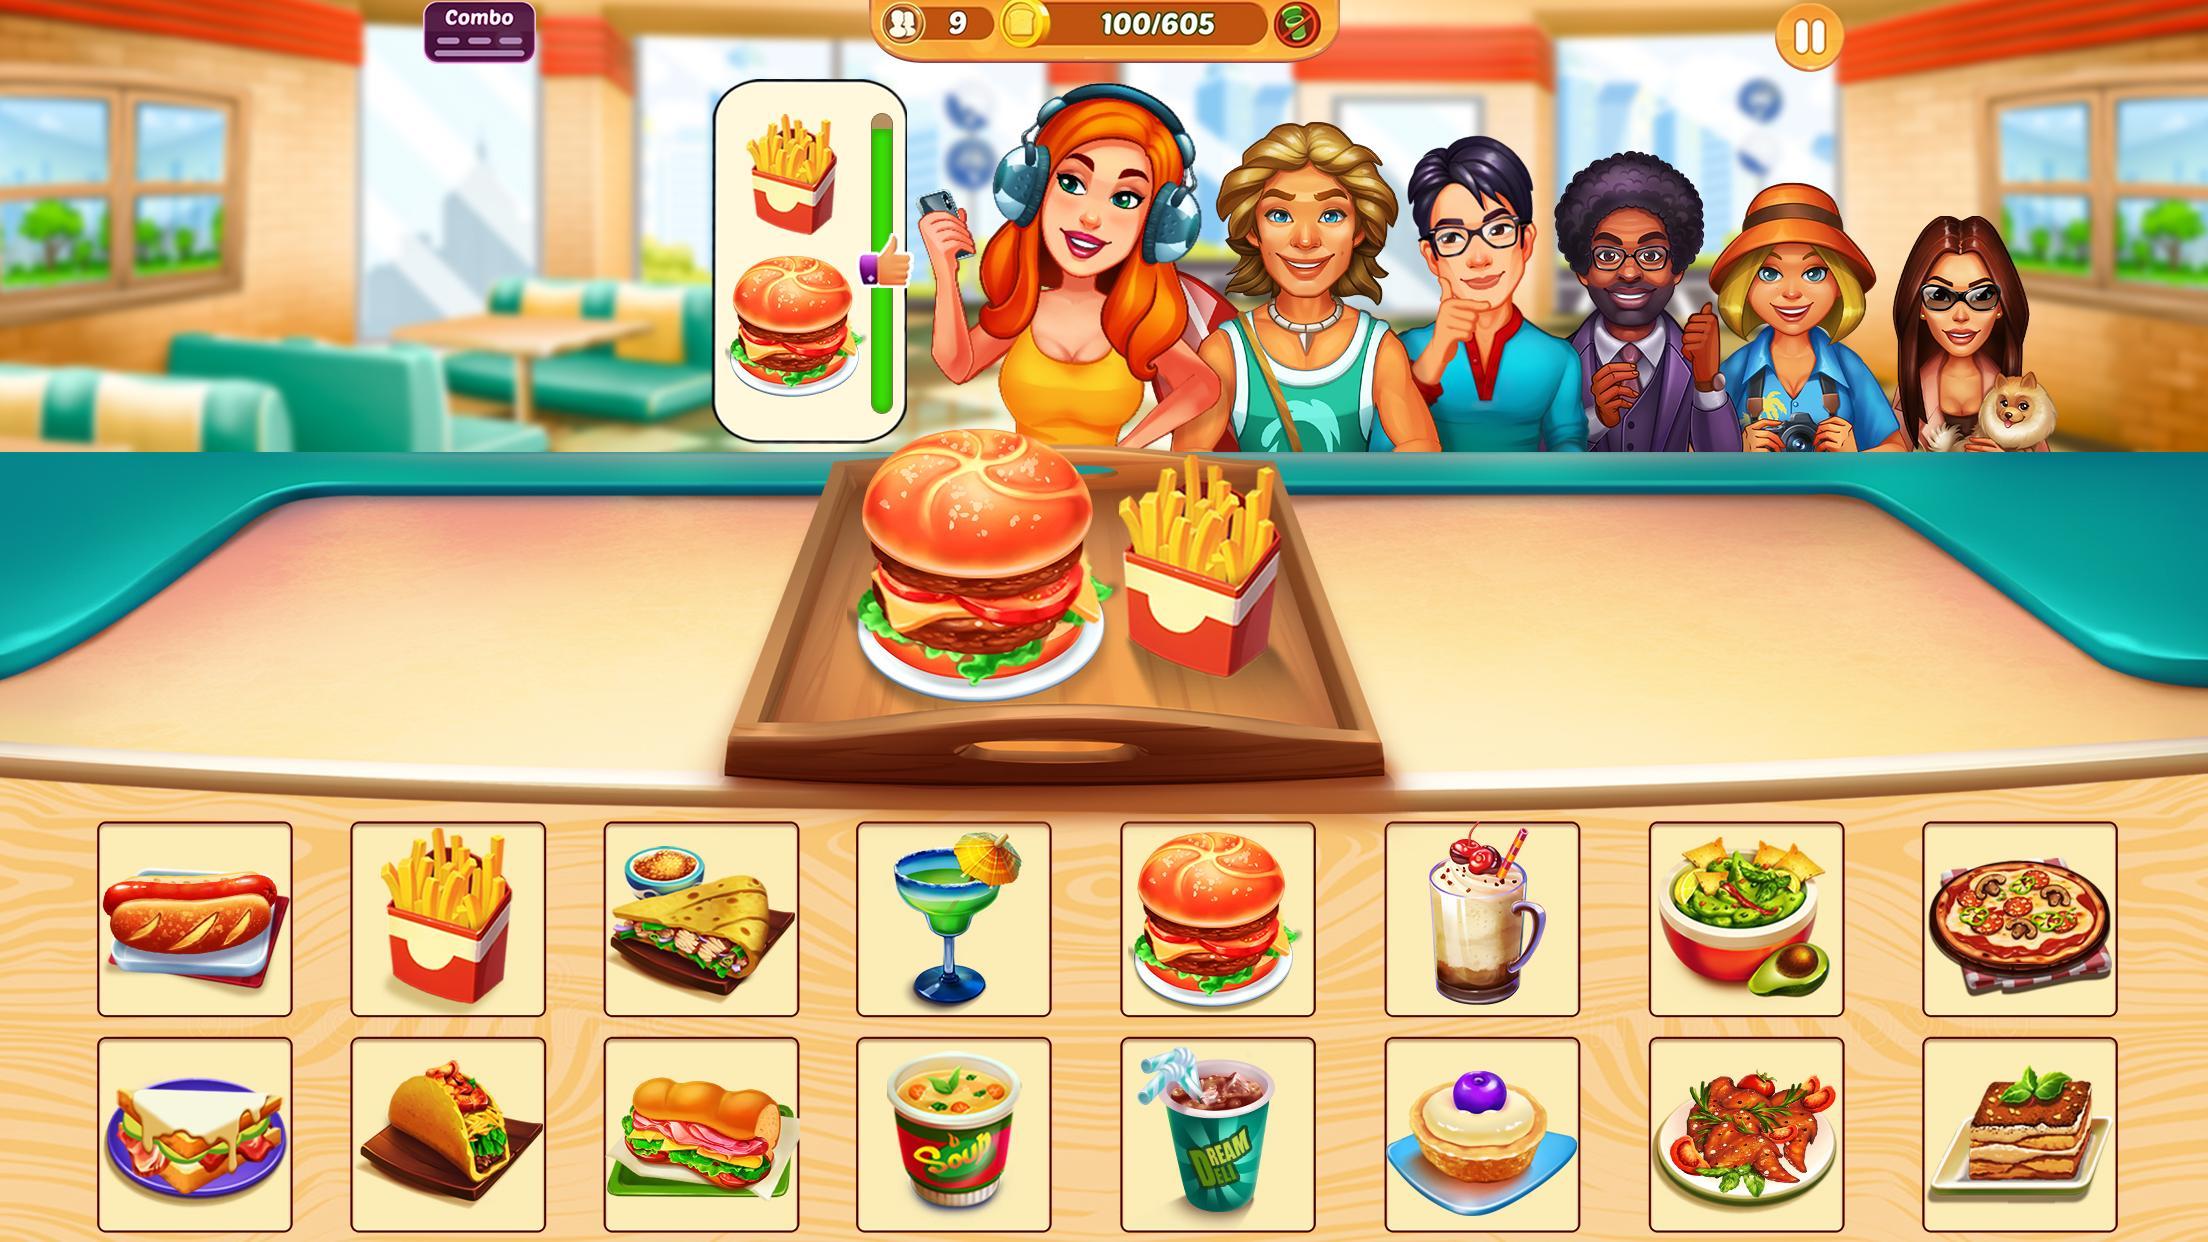 Screenshot 1 of คุกอิท - เกมร้านอาหาร 1.3.6